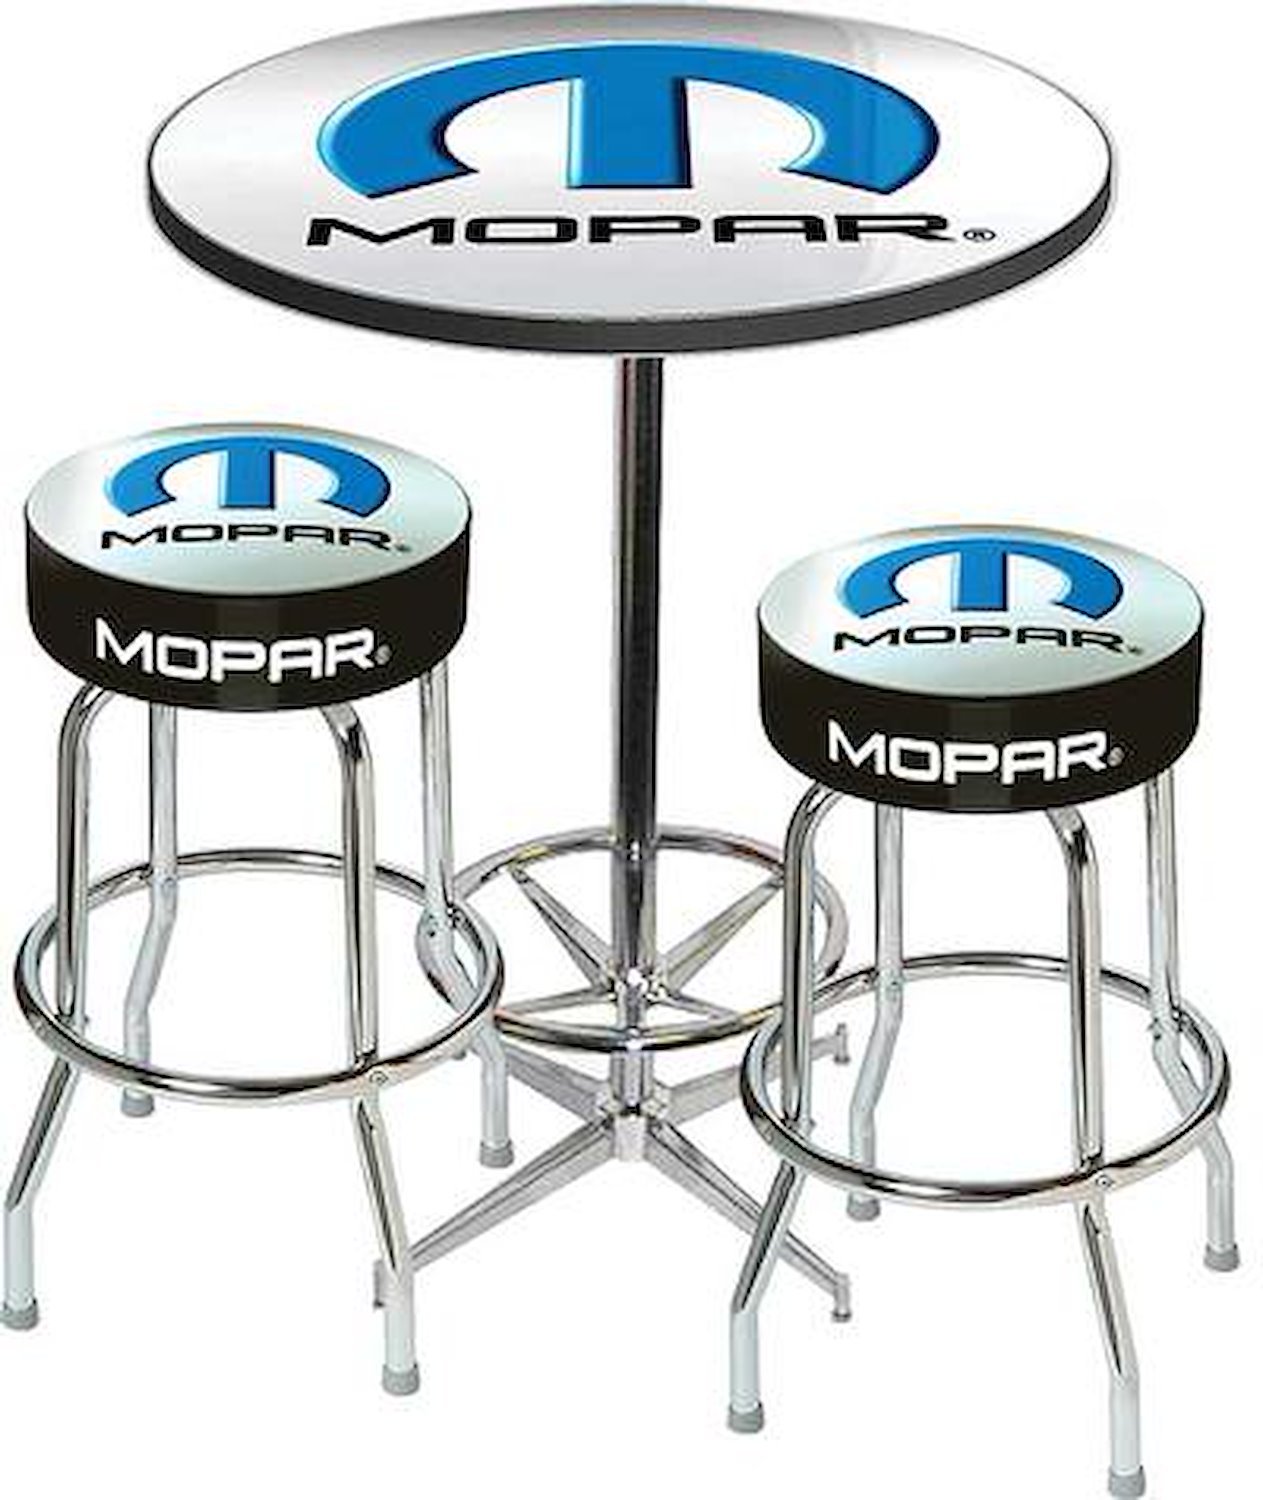 MD67708 Pub Table & Stool Set 2001-13 Mopar Logo; Chrome Based Table With Foot Rest & 2 Chrome Stools